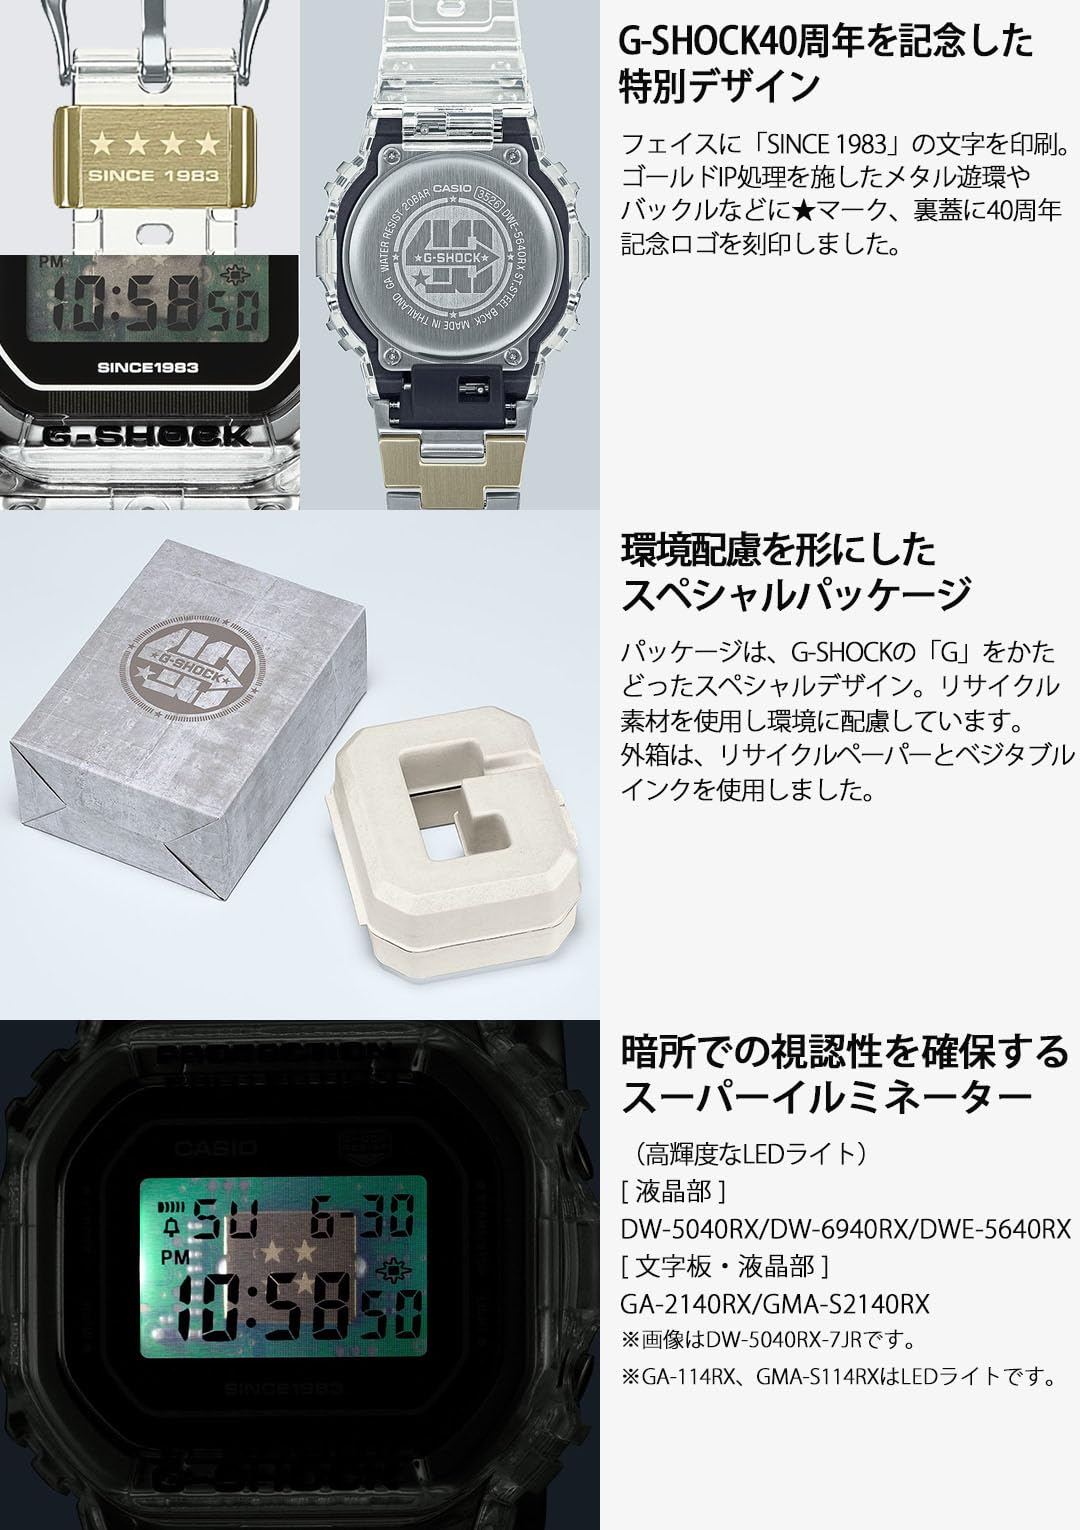 Casio GA-2140RX-7AJR [G-Shock 40th Anniversary G-Shock Limited Edition G-Shock 40th Anniversary Clear Remix Series] Ladies' Watch Japan Import July 2023 Model